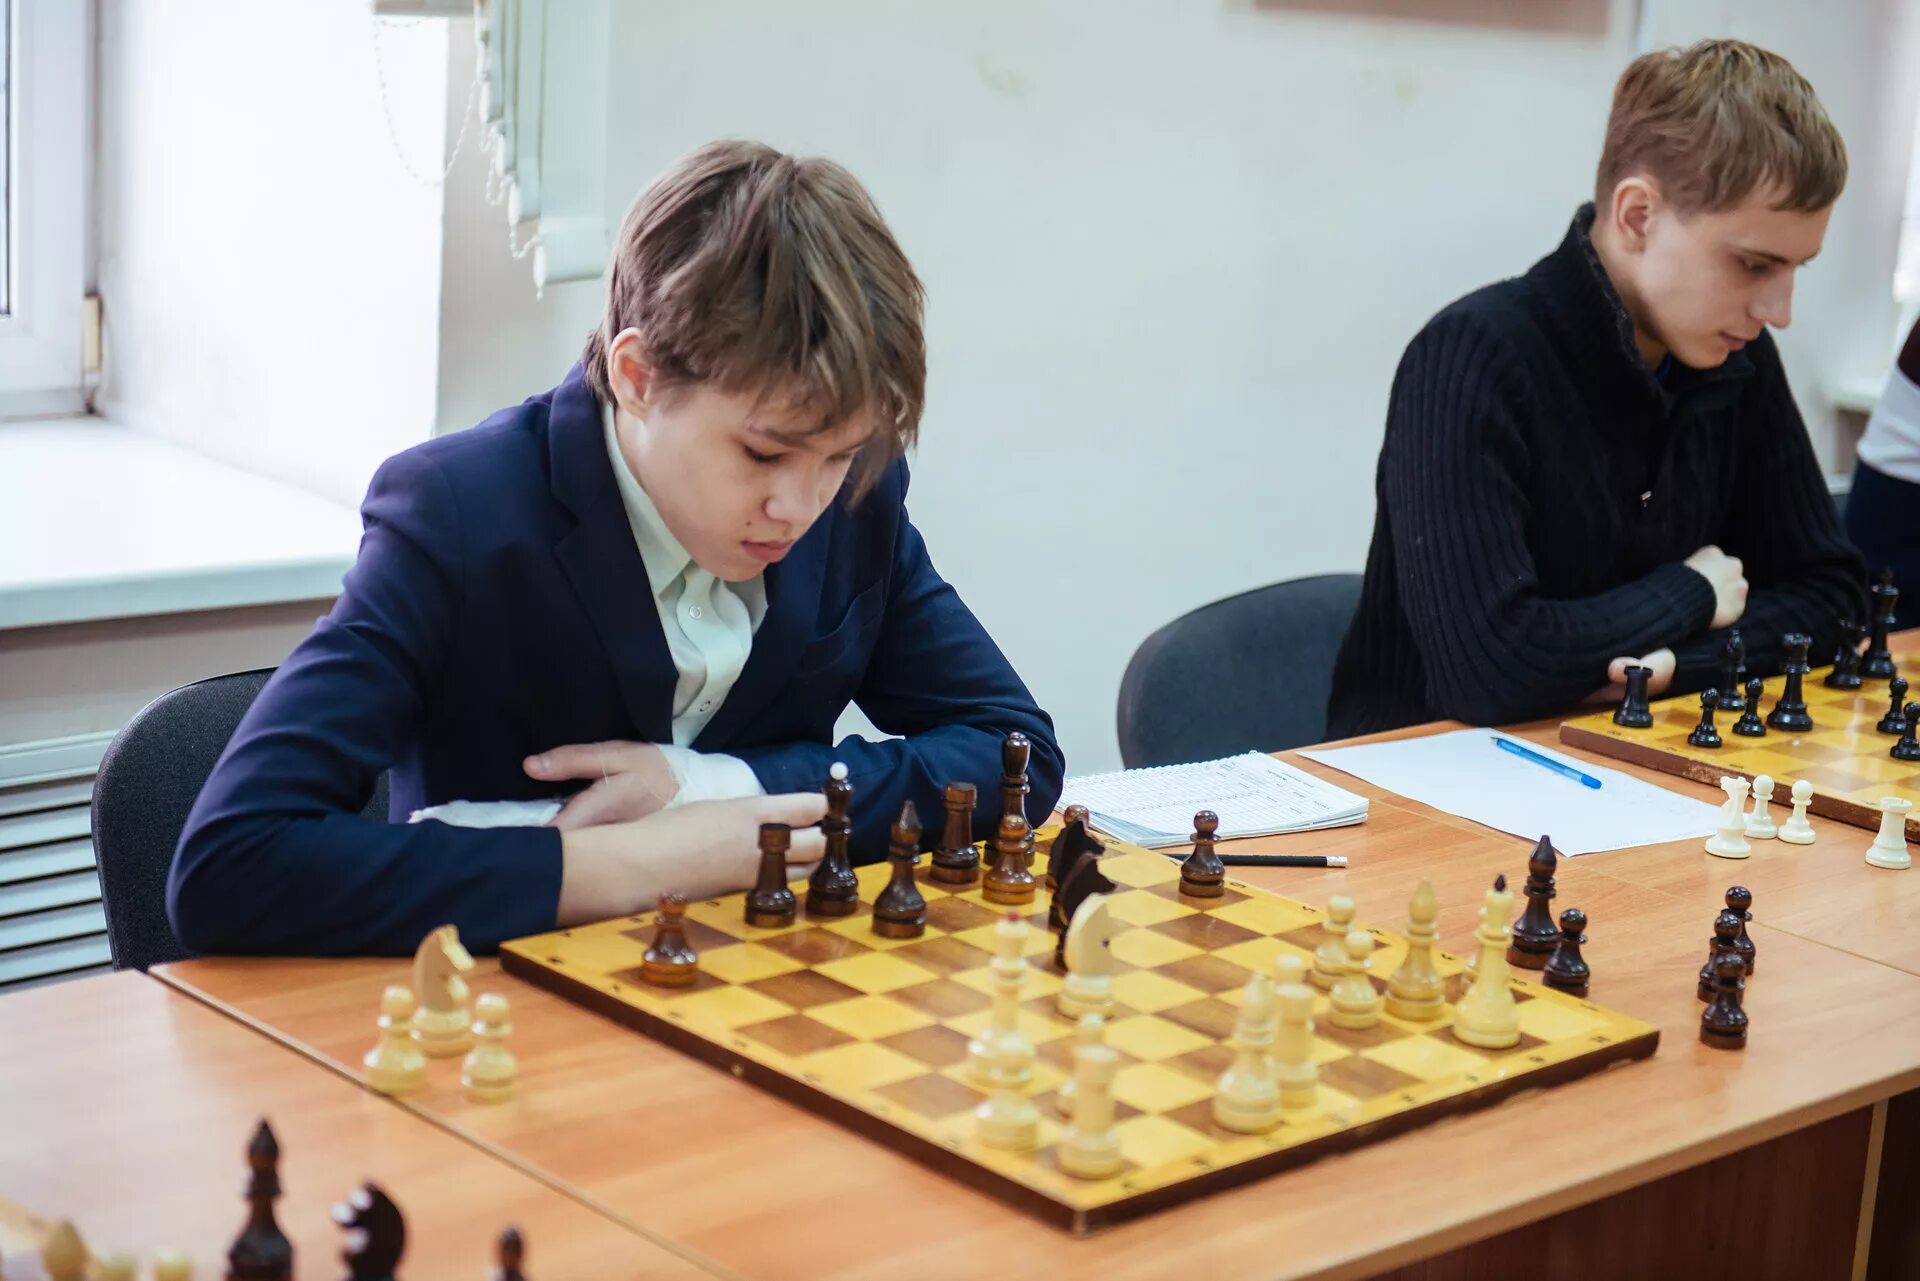 Мусалов шахматы. Подросток шахматист. Шахматы "школьник". Школьники играют в шахматы. Играть в шахматы в шахматном клубе